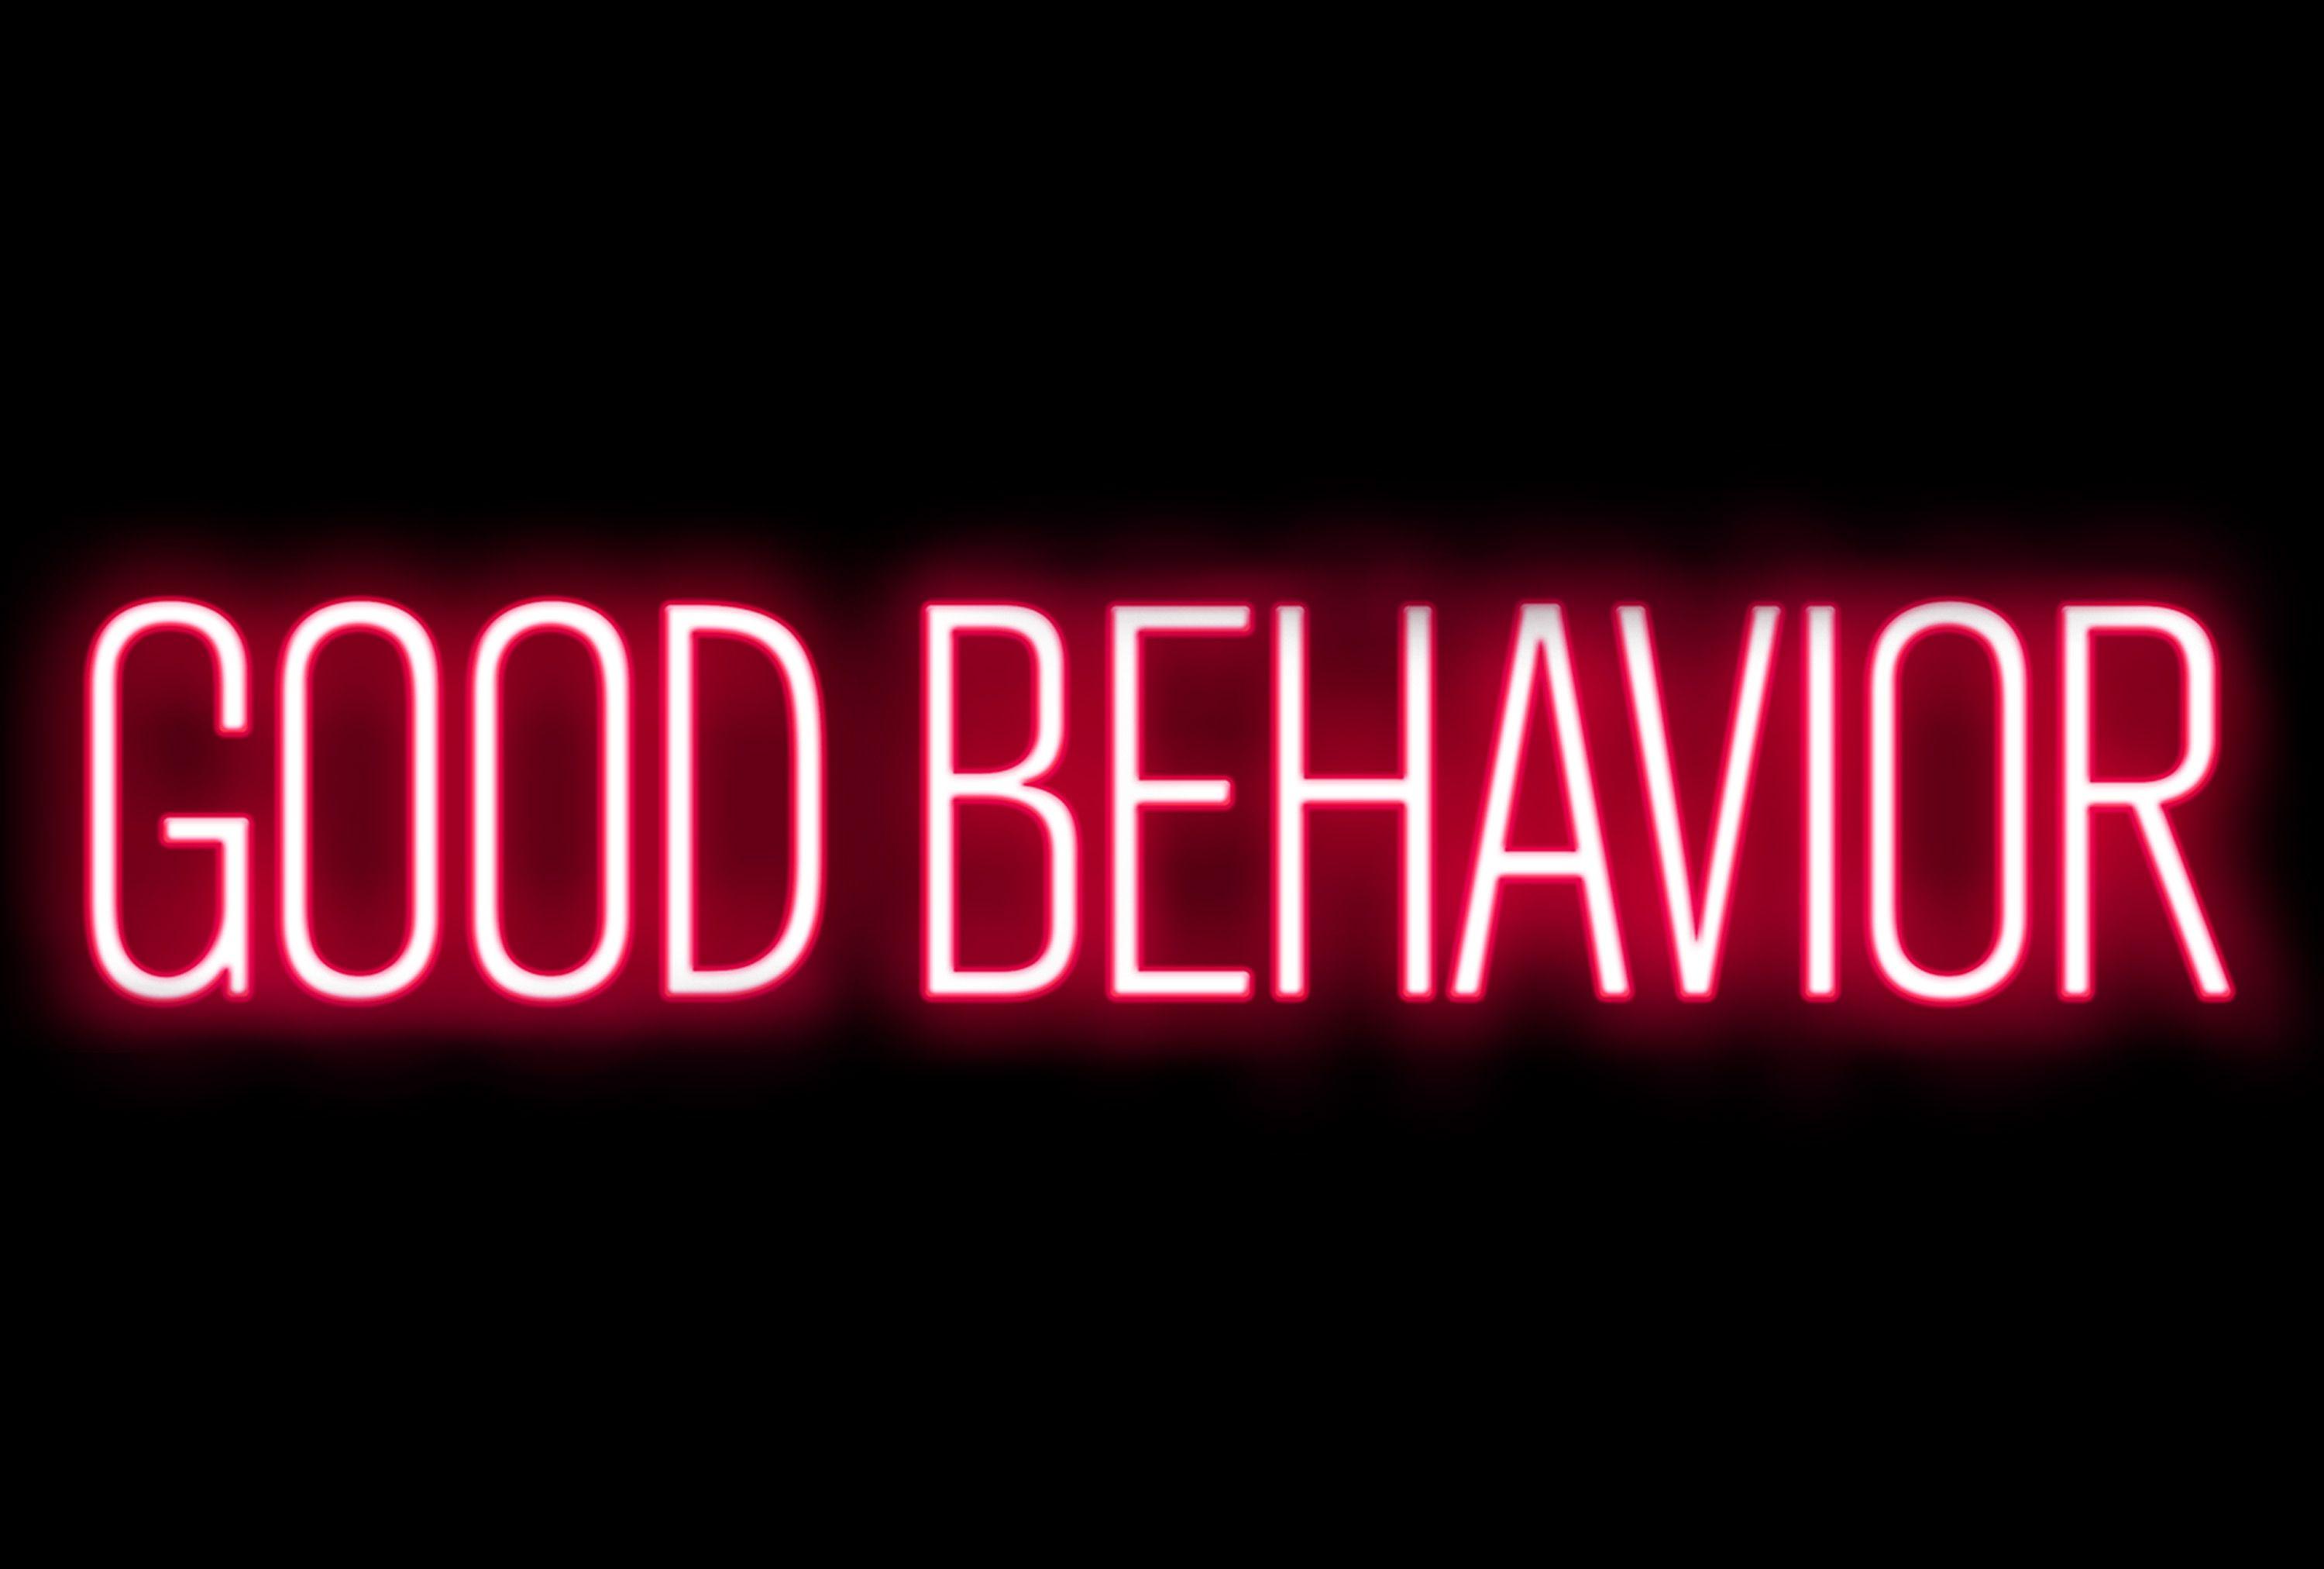 Behavior Logo - Good Behavior logo